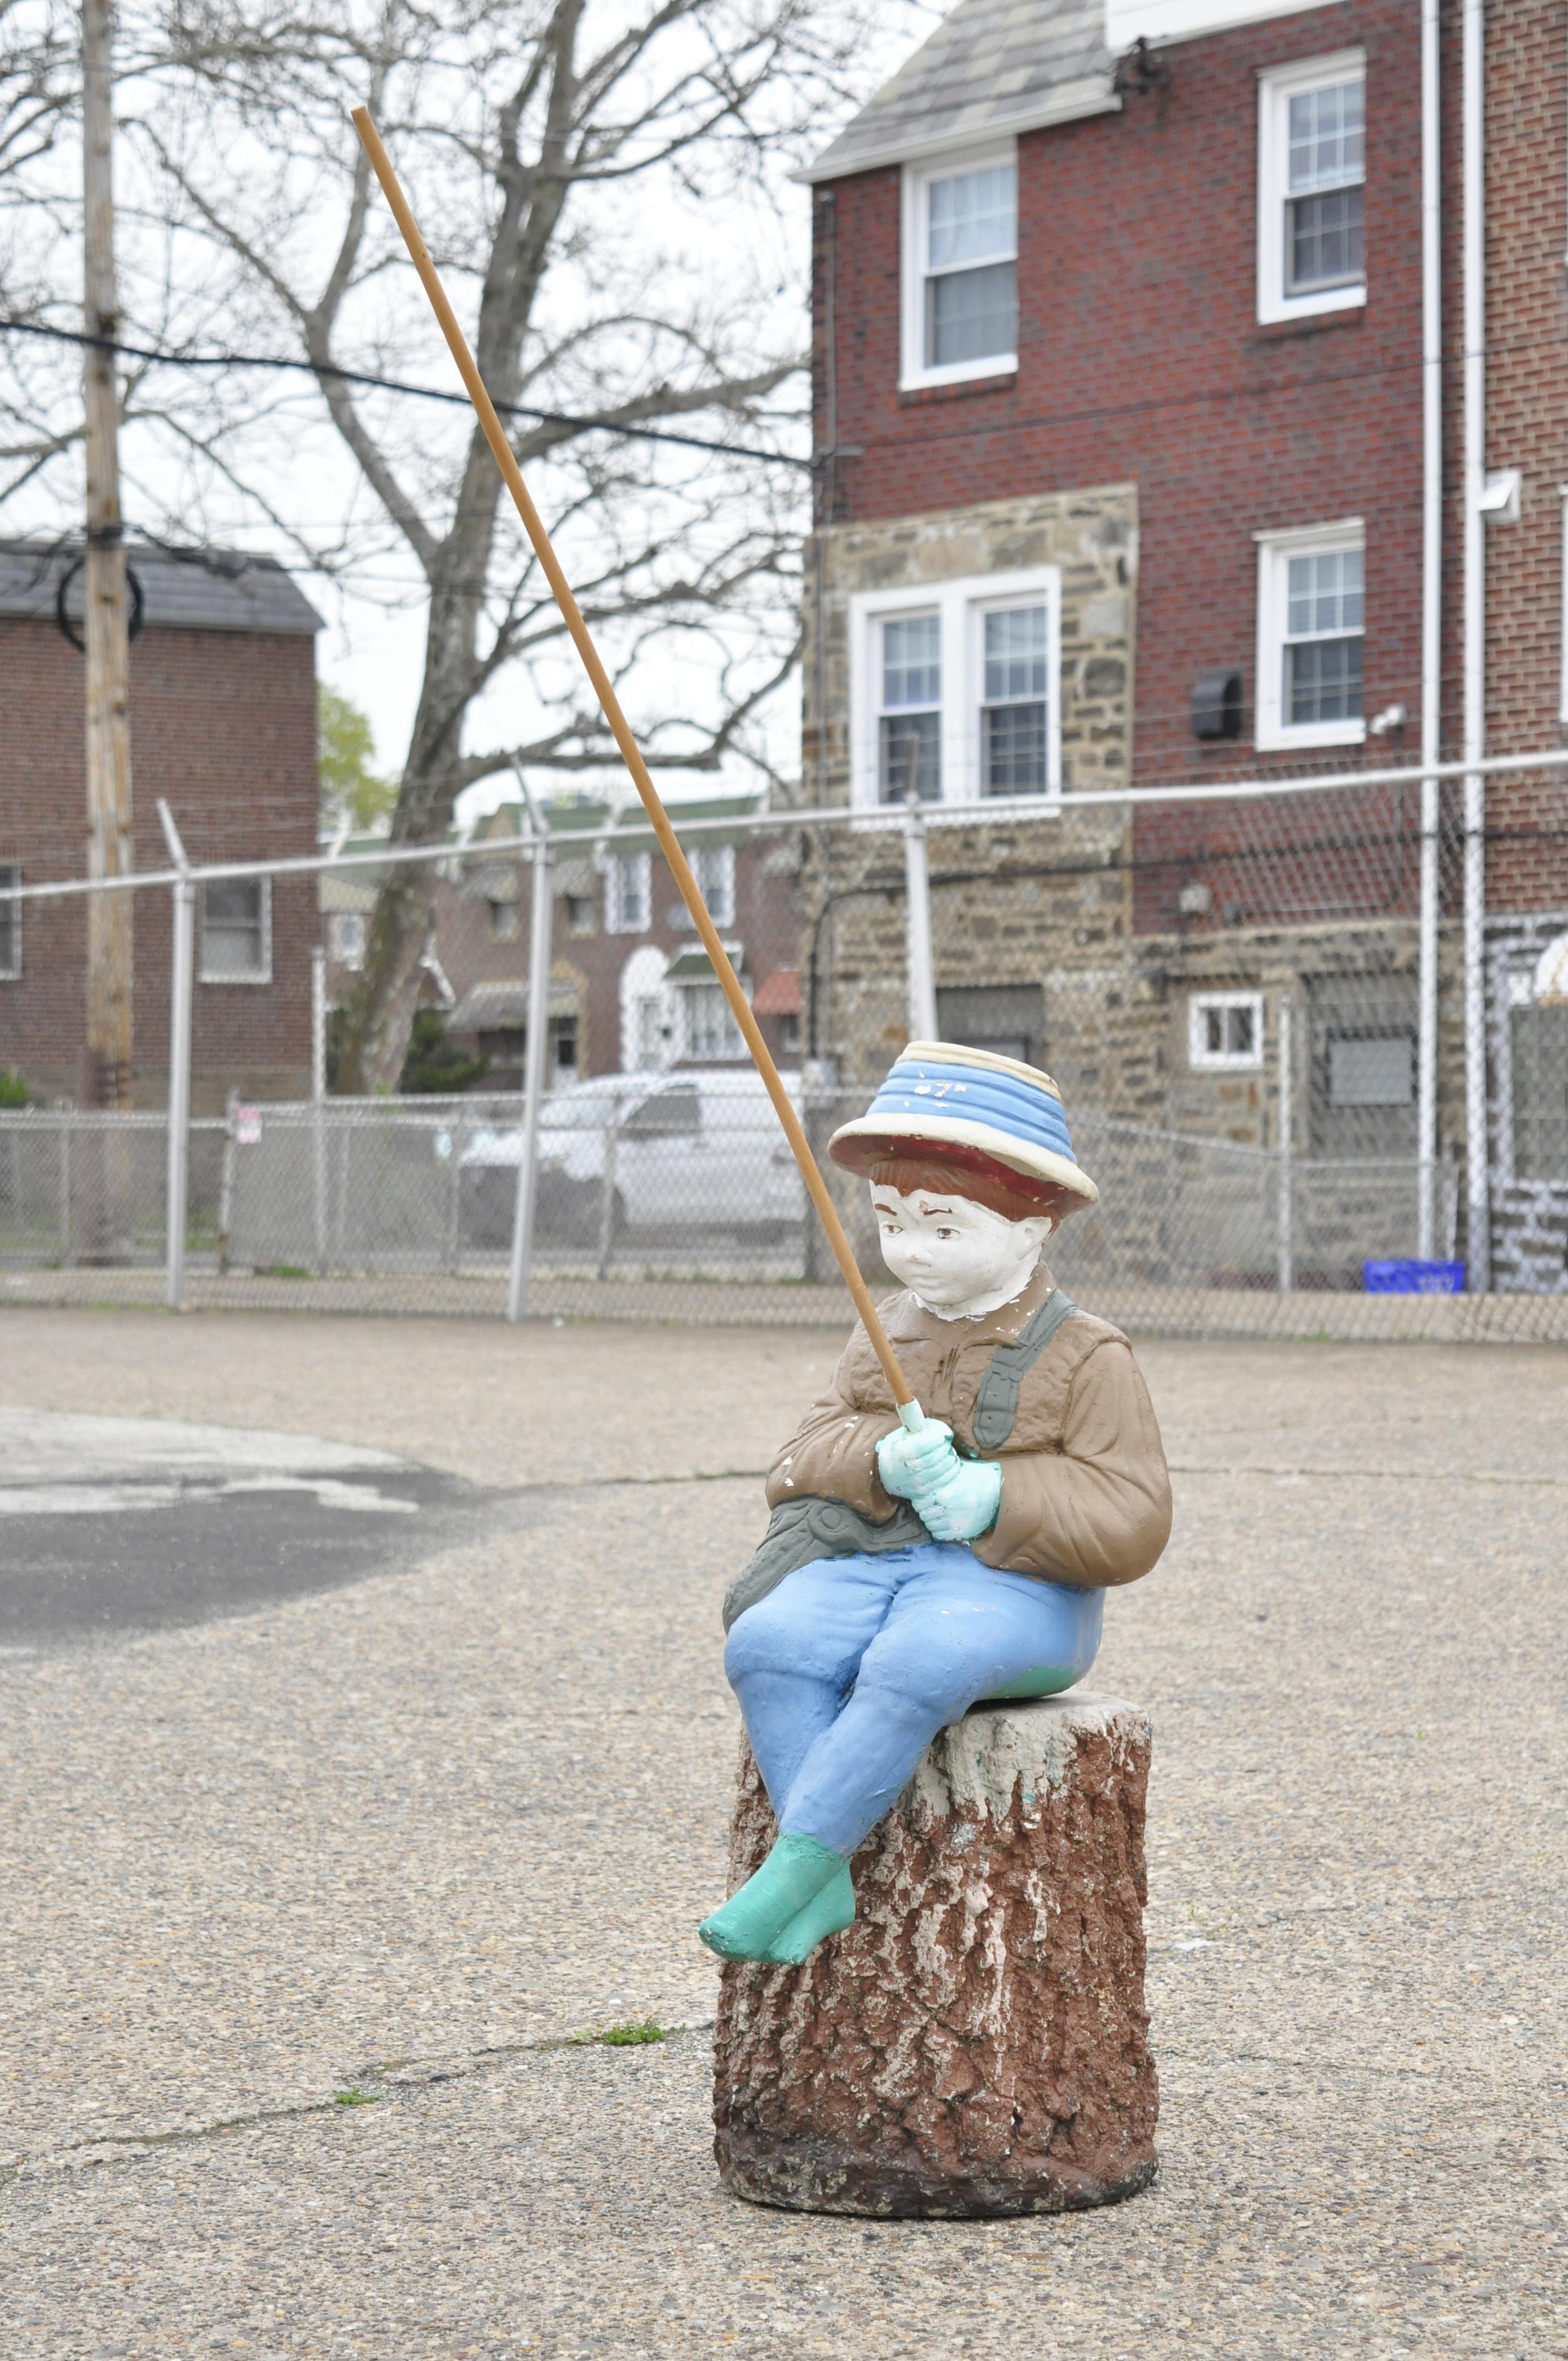 North American Vtg Concrete Boy Fishing Seated on Tree Stump Garden Statue Ornament Lawn Jockey